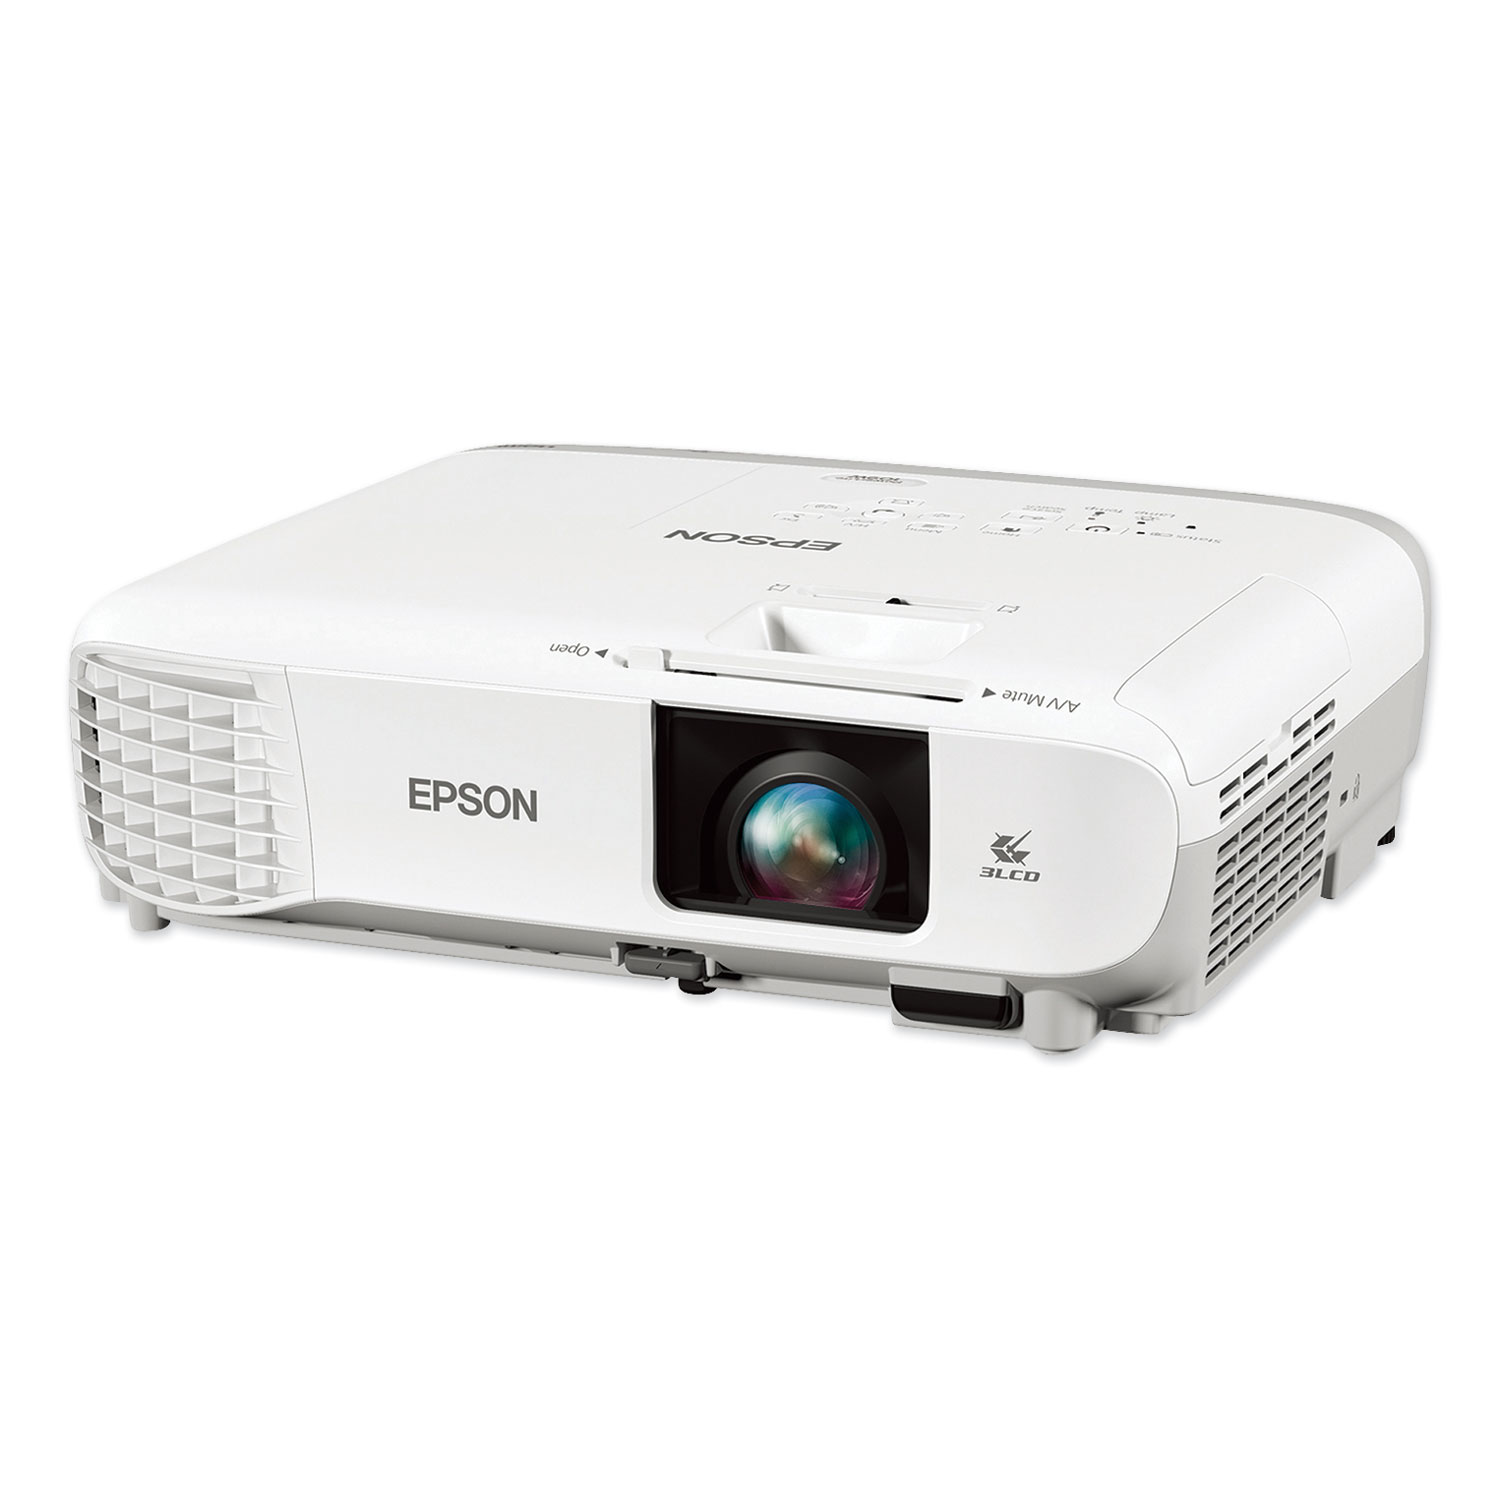  Epson V11H861020 PowerLite 109W WXGA 3LCD Projector, 4,000 Lumens, 1280 x 800 Pixels, 1.2x Zoom (EPSV11H861020) 